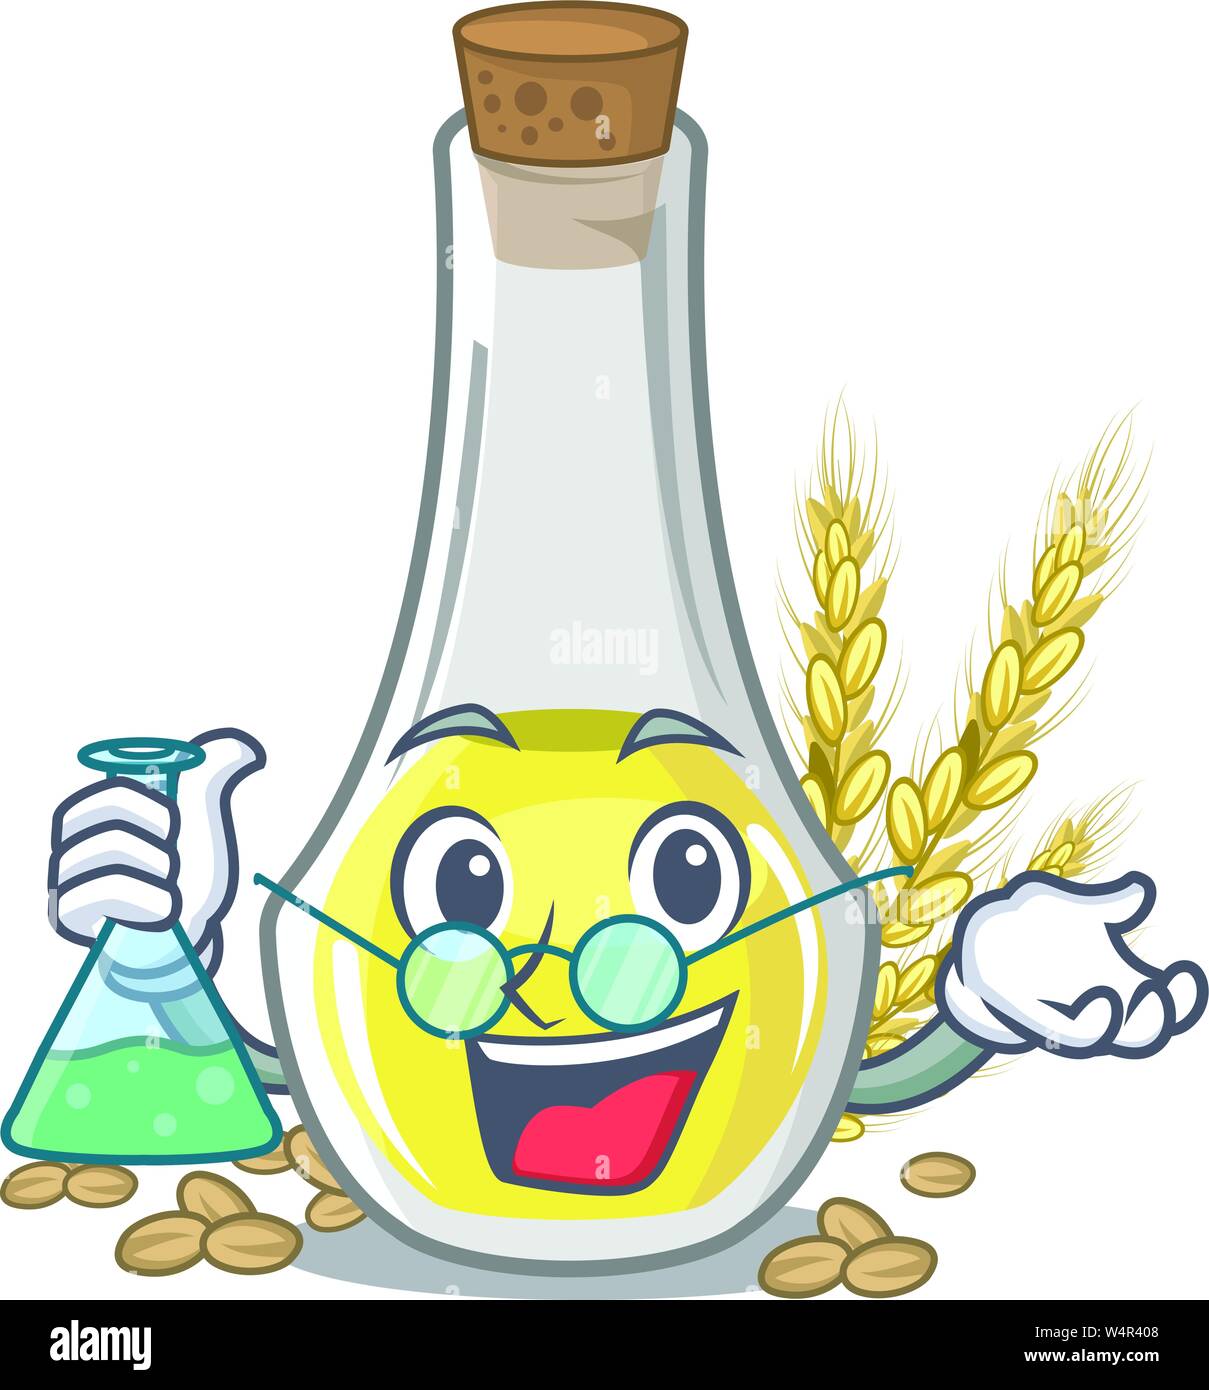 Professor wheat germ oil the mascot shape vector illustration Stock Vector